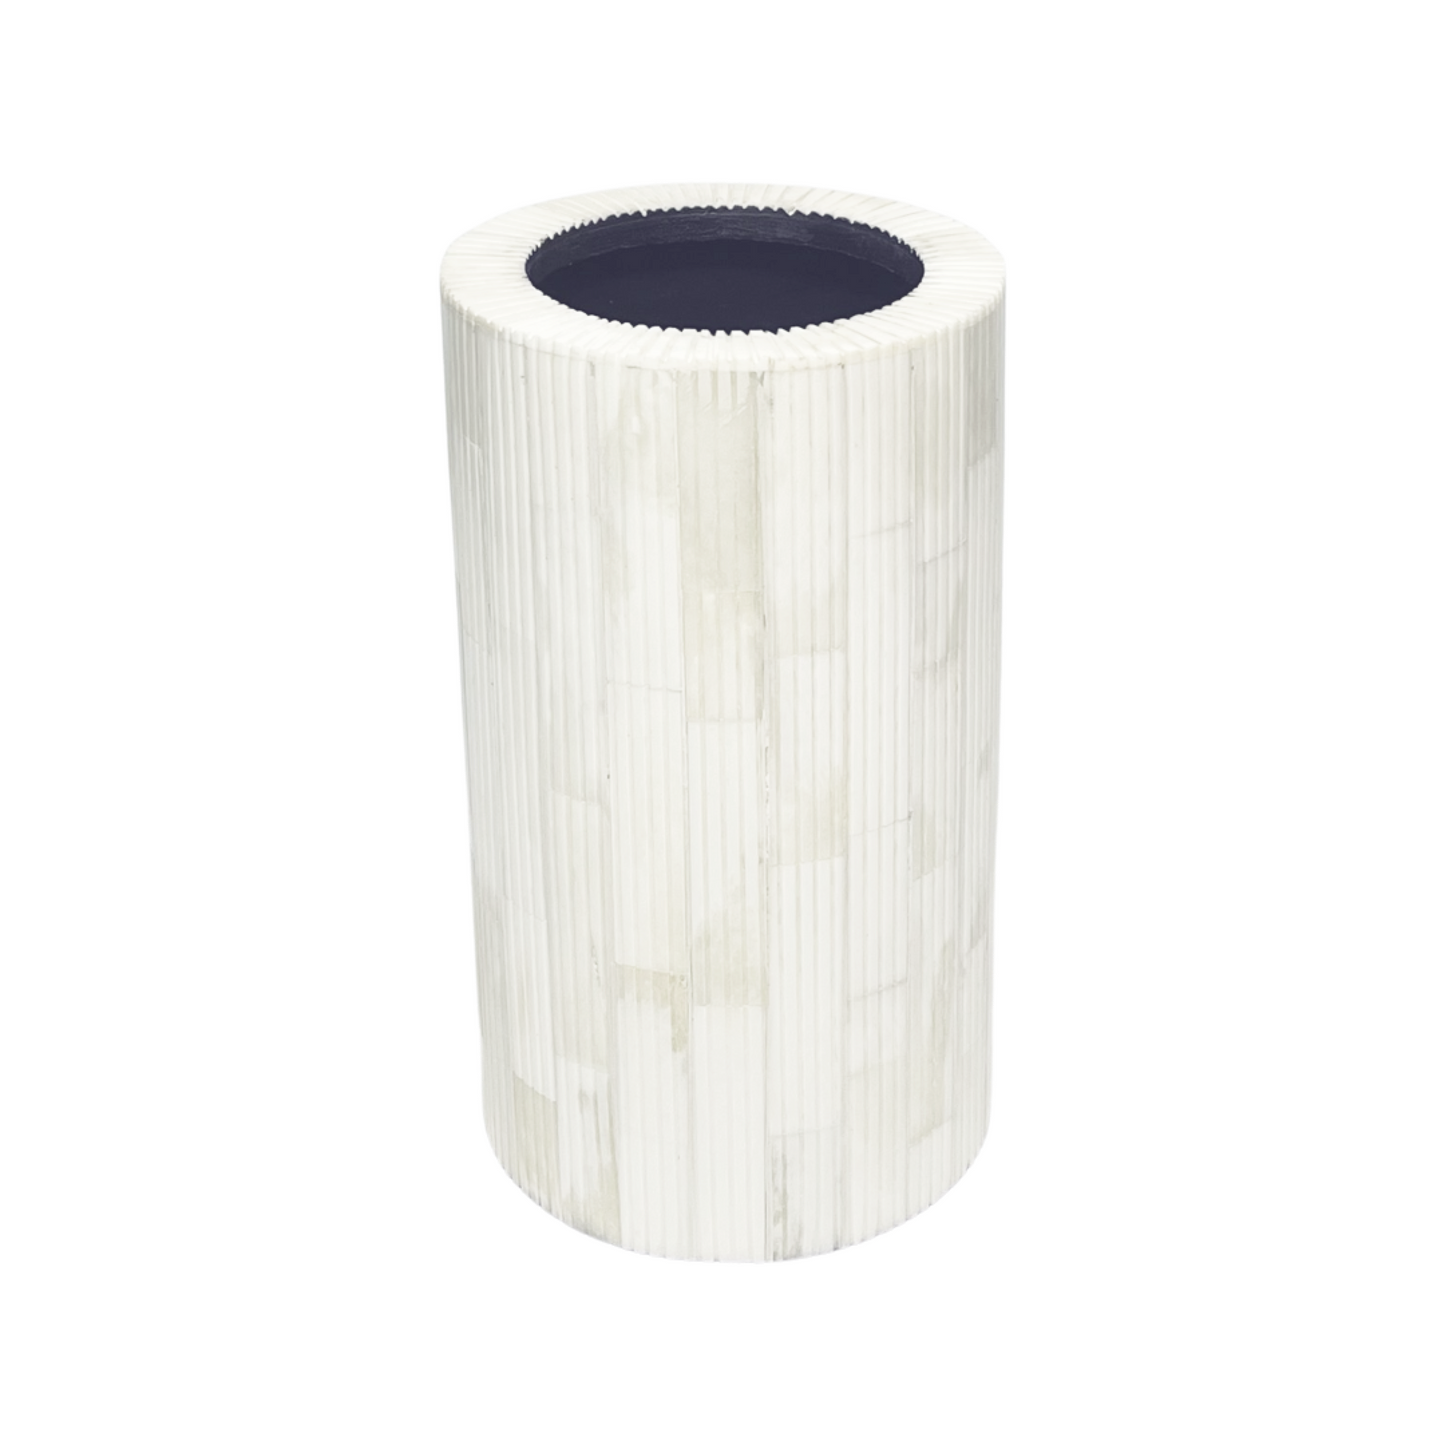 Ornate Bone Inlay Vase